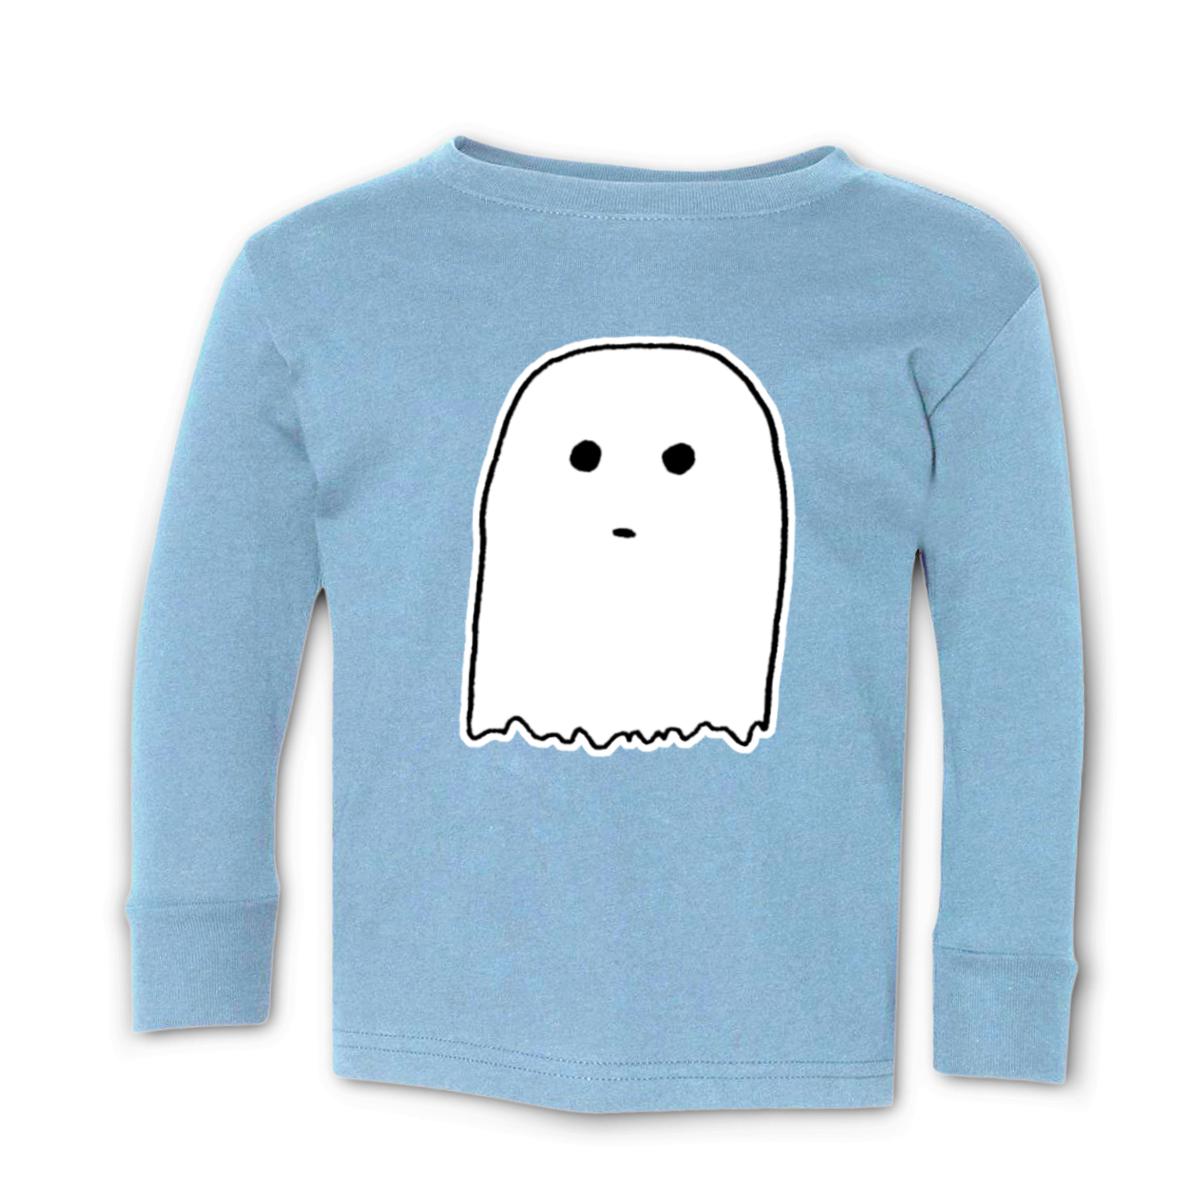 Ghostie Toddler Long Sleeve Tee 2T light-blue